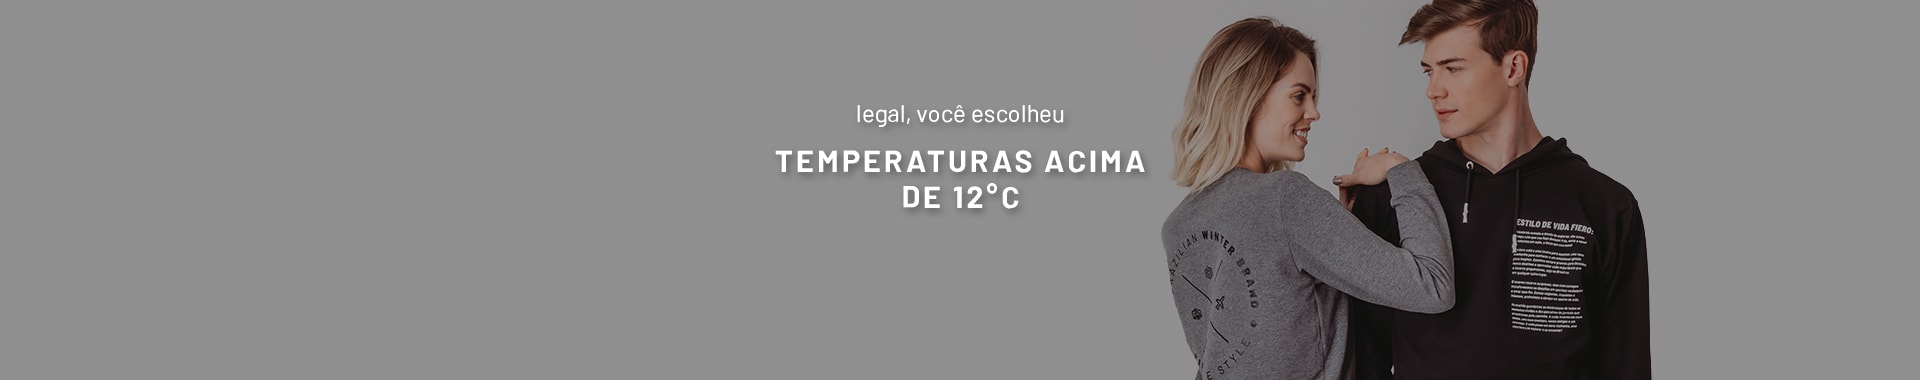 Banner temperatura acima de 12°C